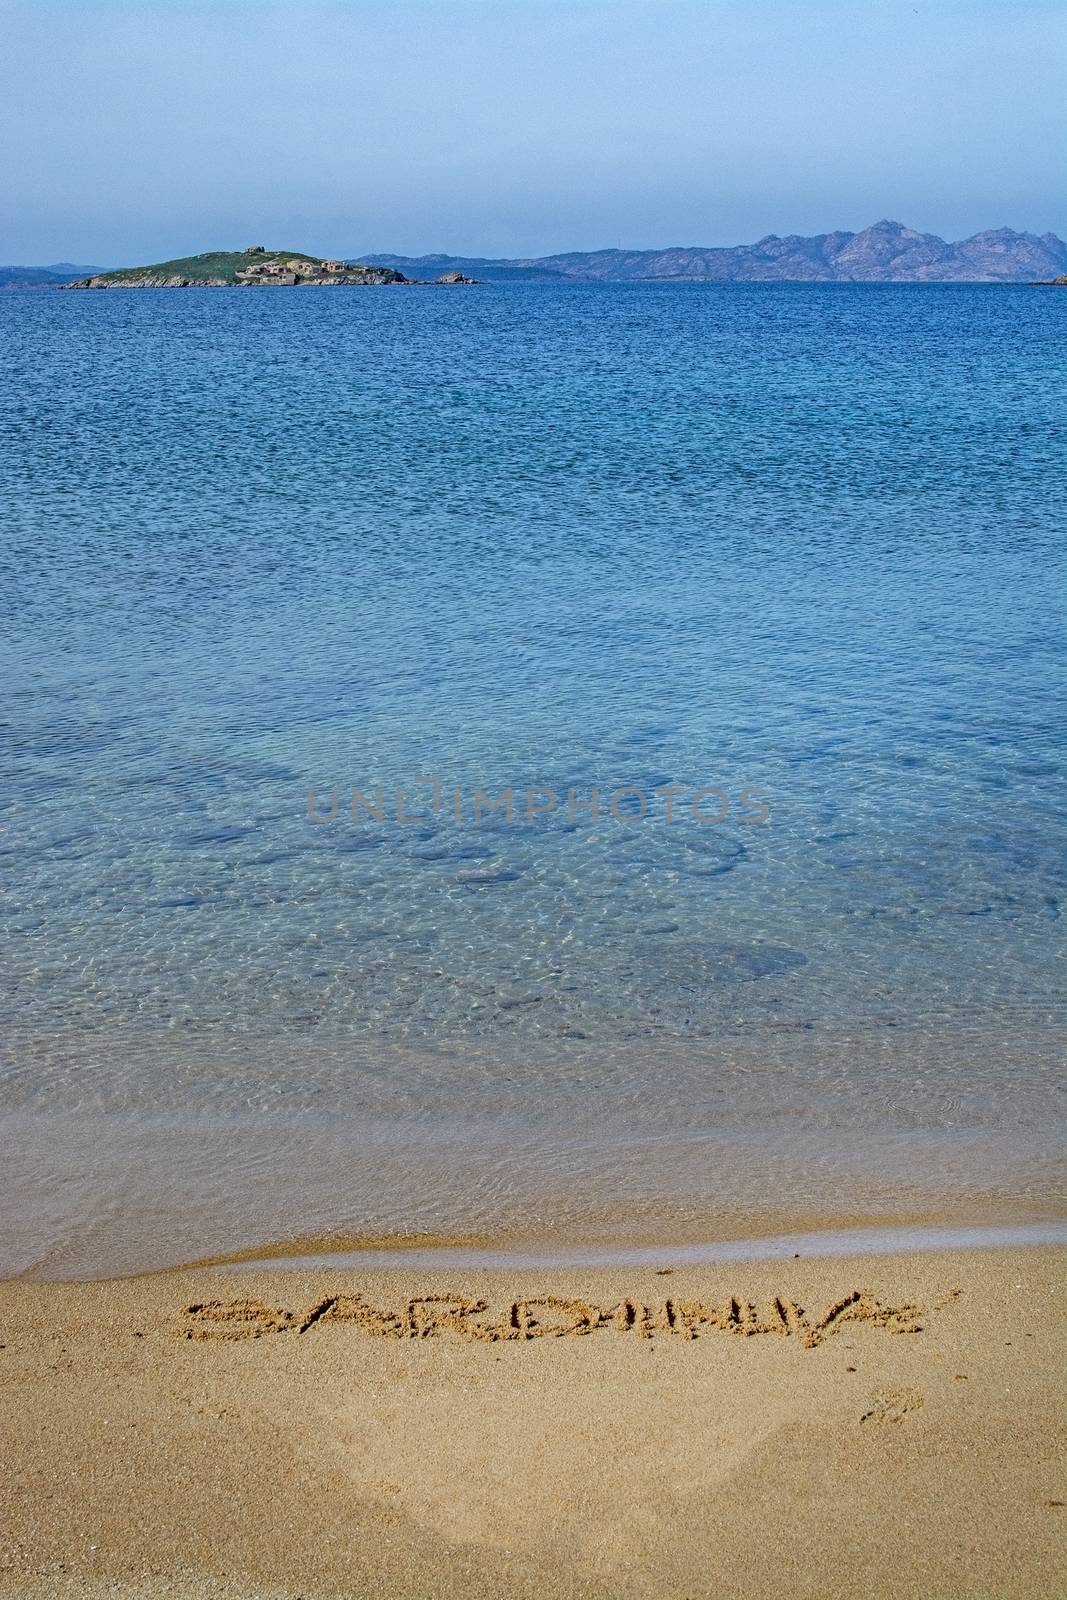 Sardinia word written in sand on a beach by ArtesiaWells